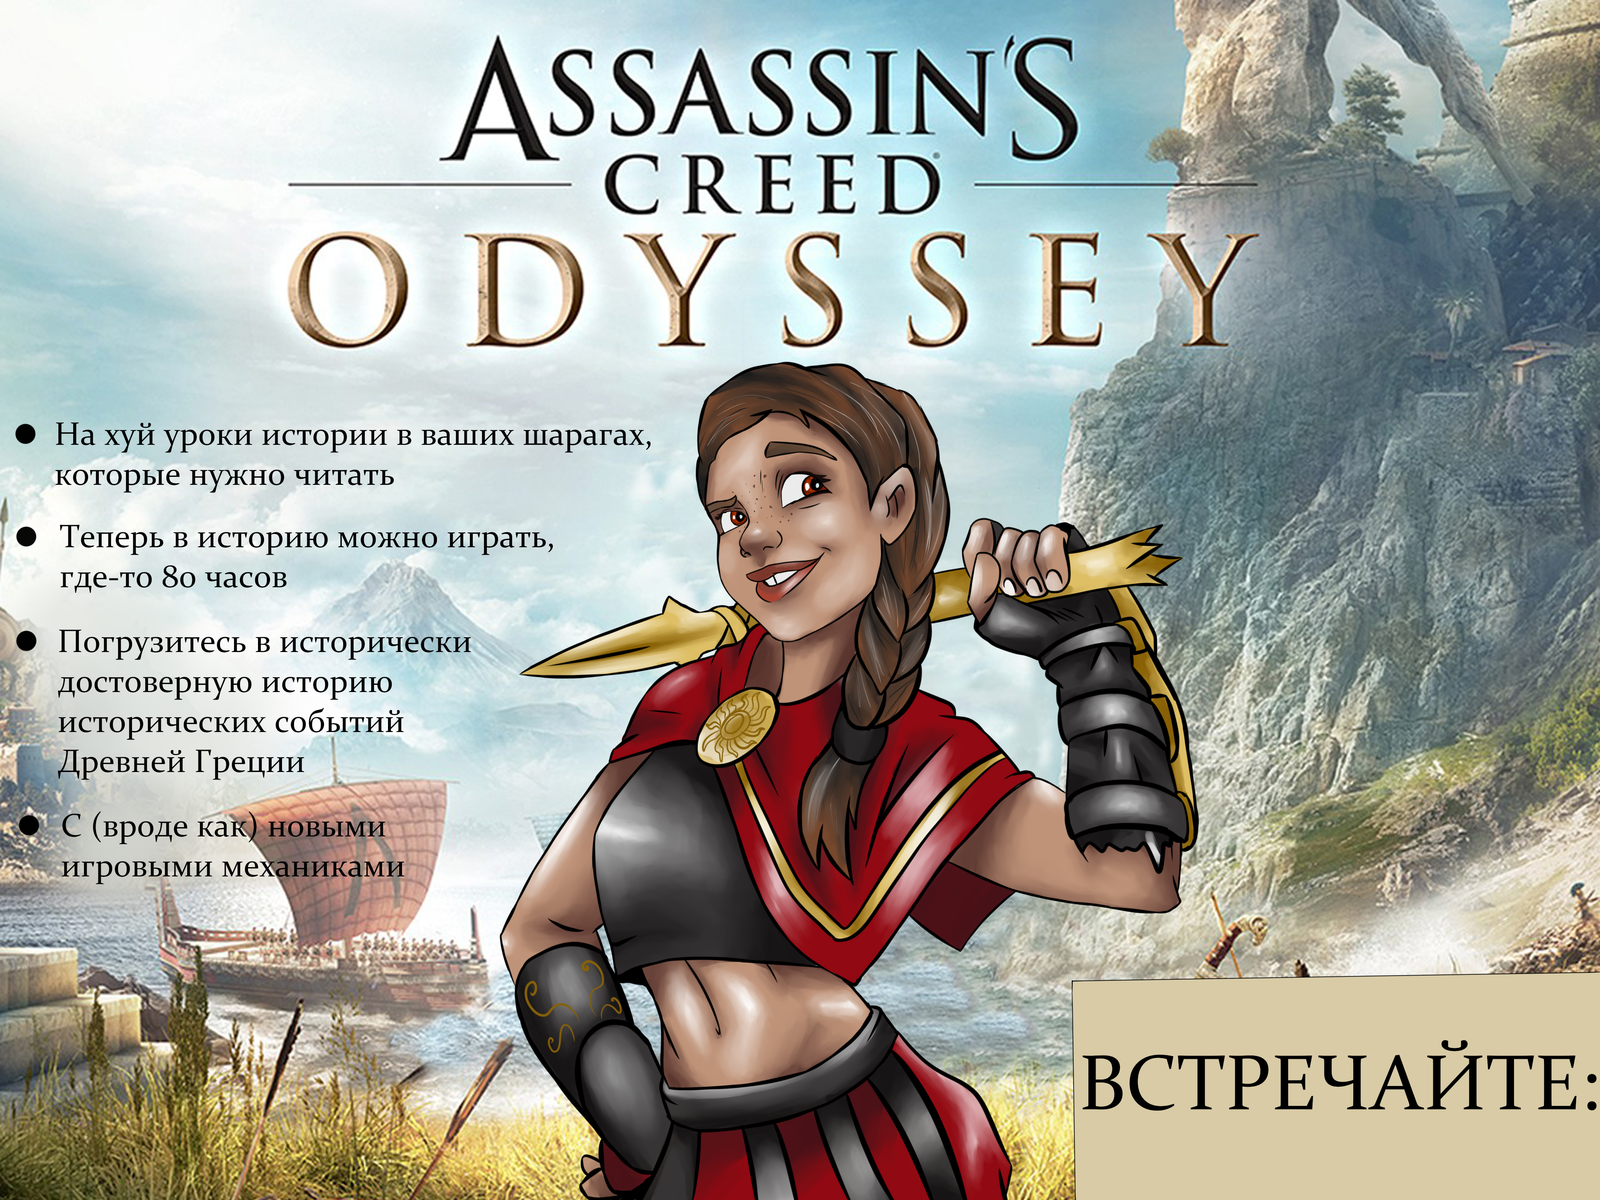 Assassin's creed odyssey coming soon - Longpost, Ubisoft, Odyssey, Assassin, Humor, Comics, Assassins creed, Cassandra, Assassins creed odyssey, My